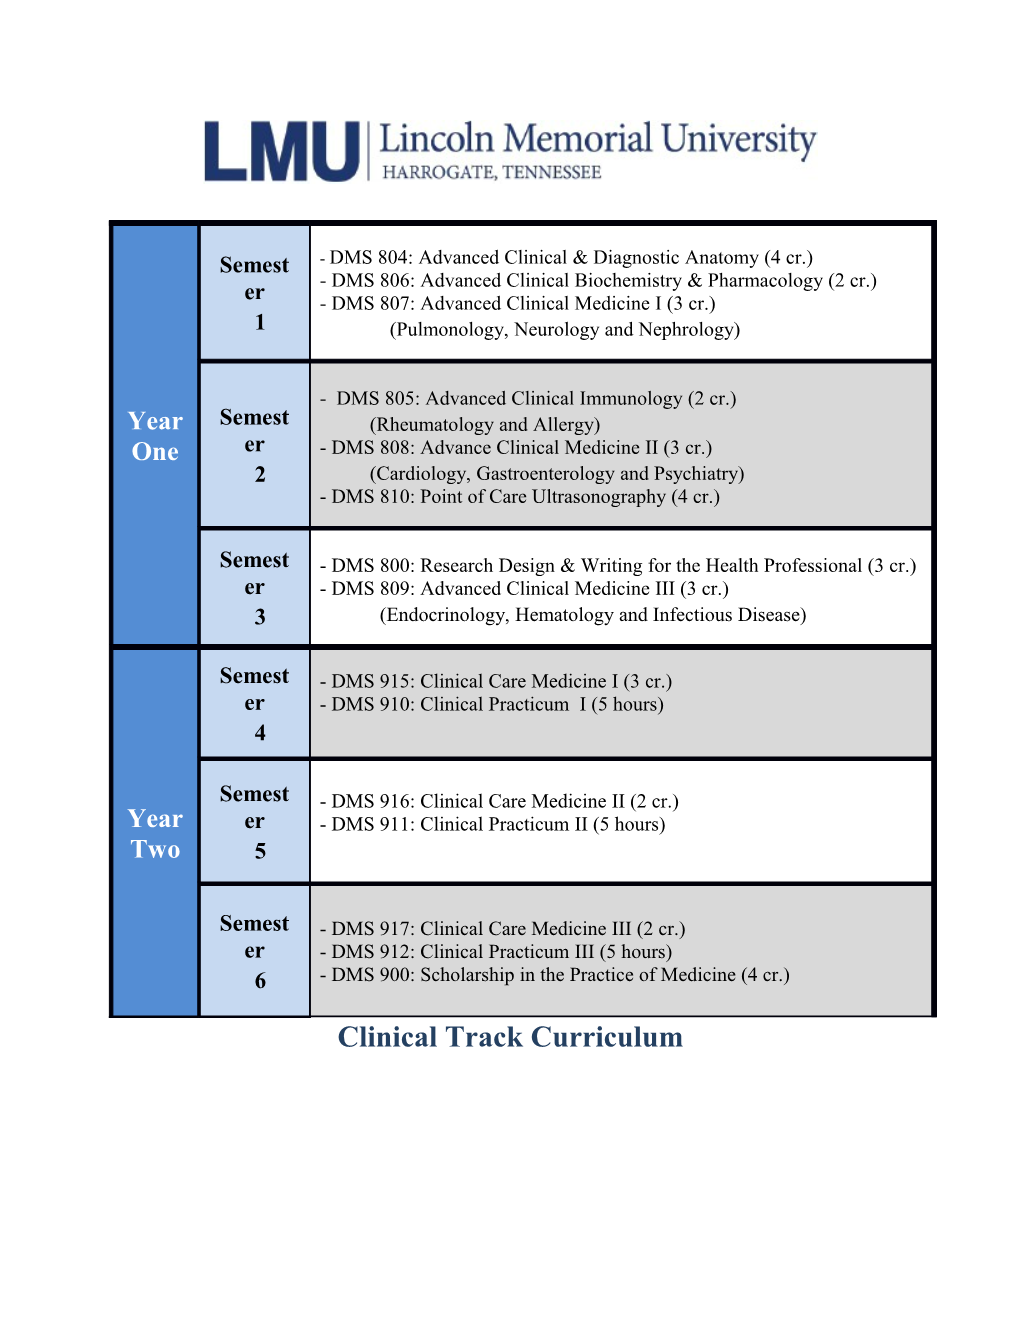 Year One / Semester 1 / - DMS 804: Advanced Clinical & Diagnostic Anatomy (4 Cr.) - DMS